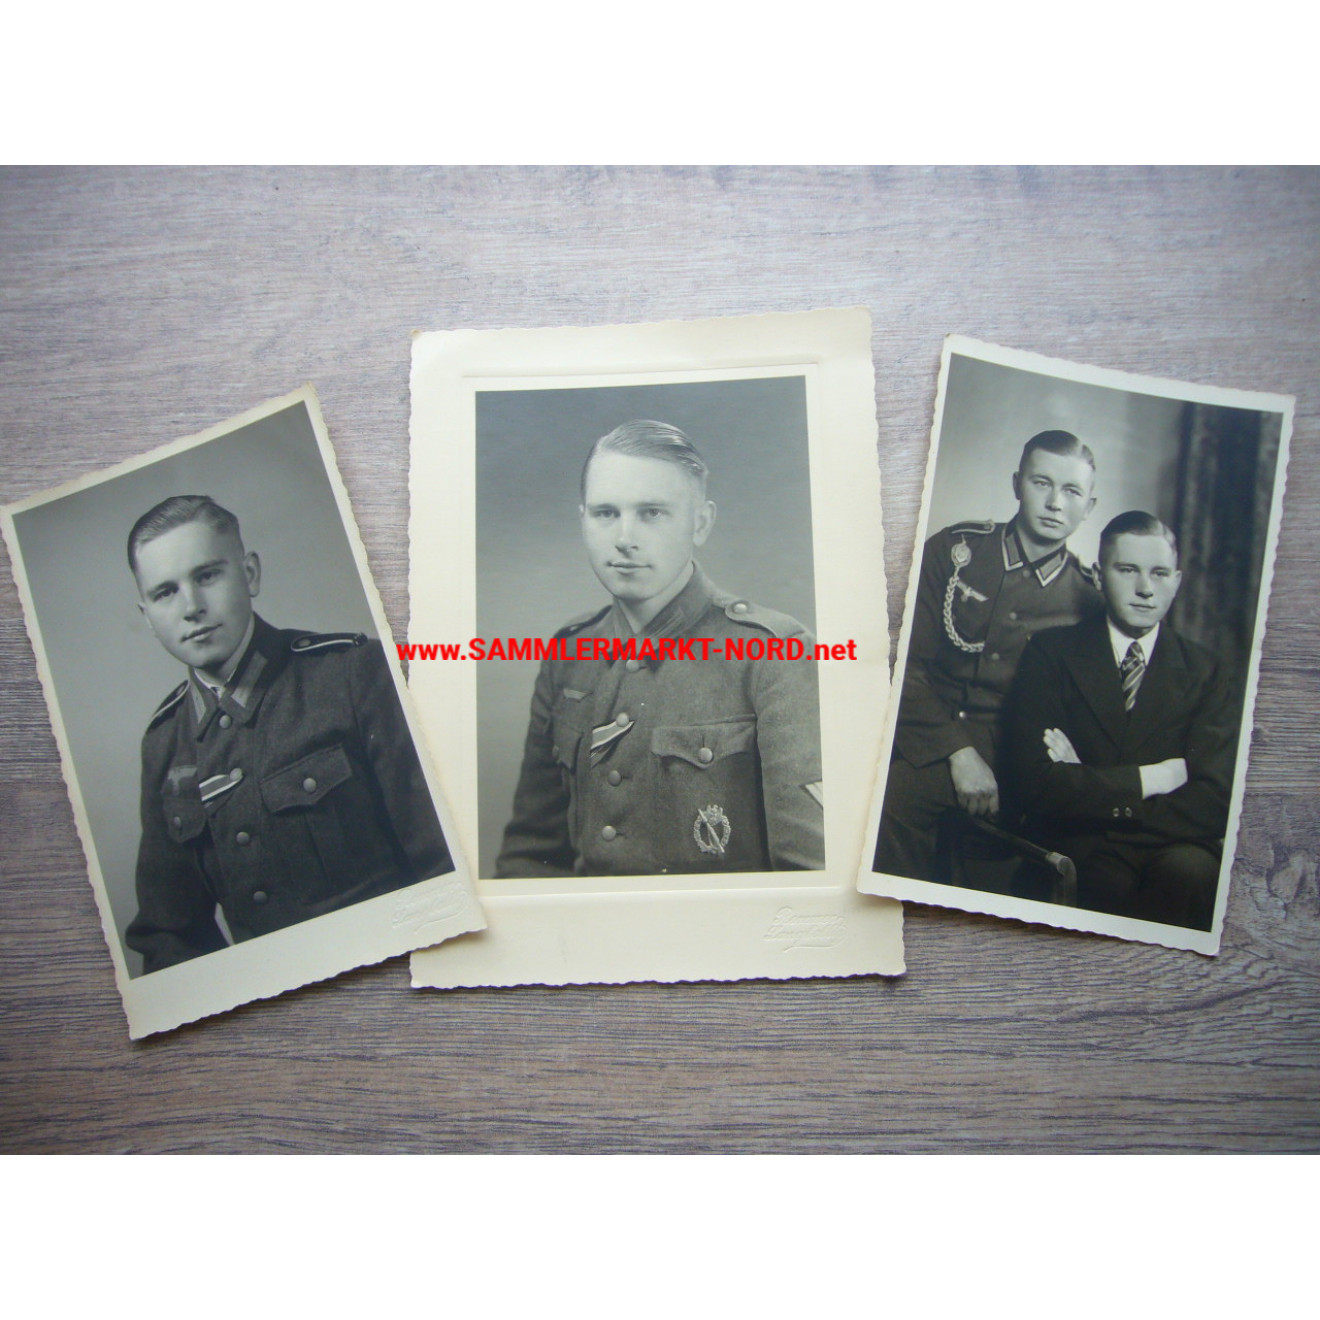 3 x portrait photo of a soldier - different ranks